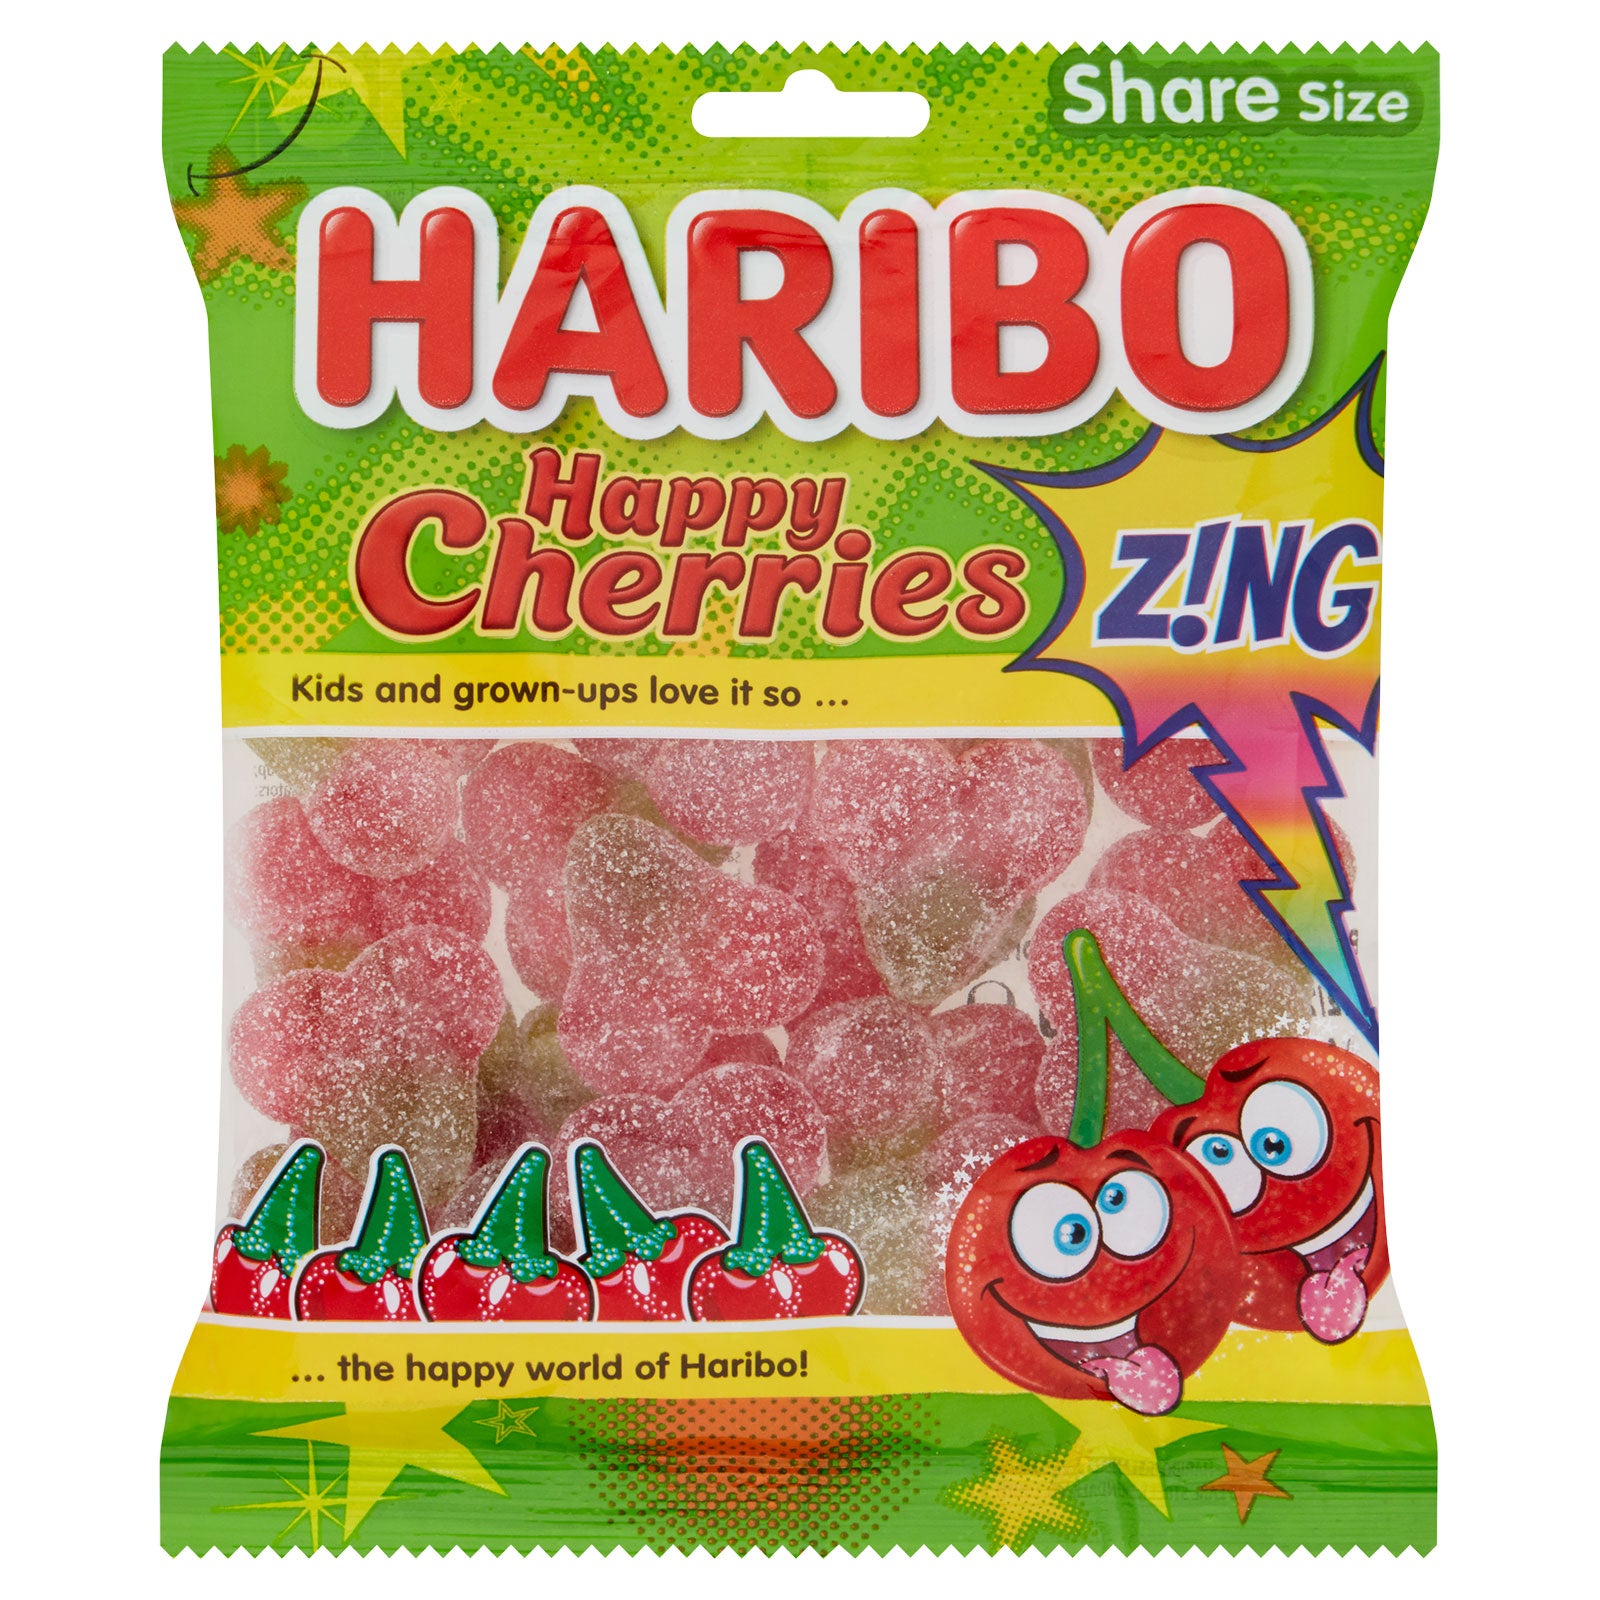 Haribo Happy cherries Zing 160gm